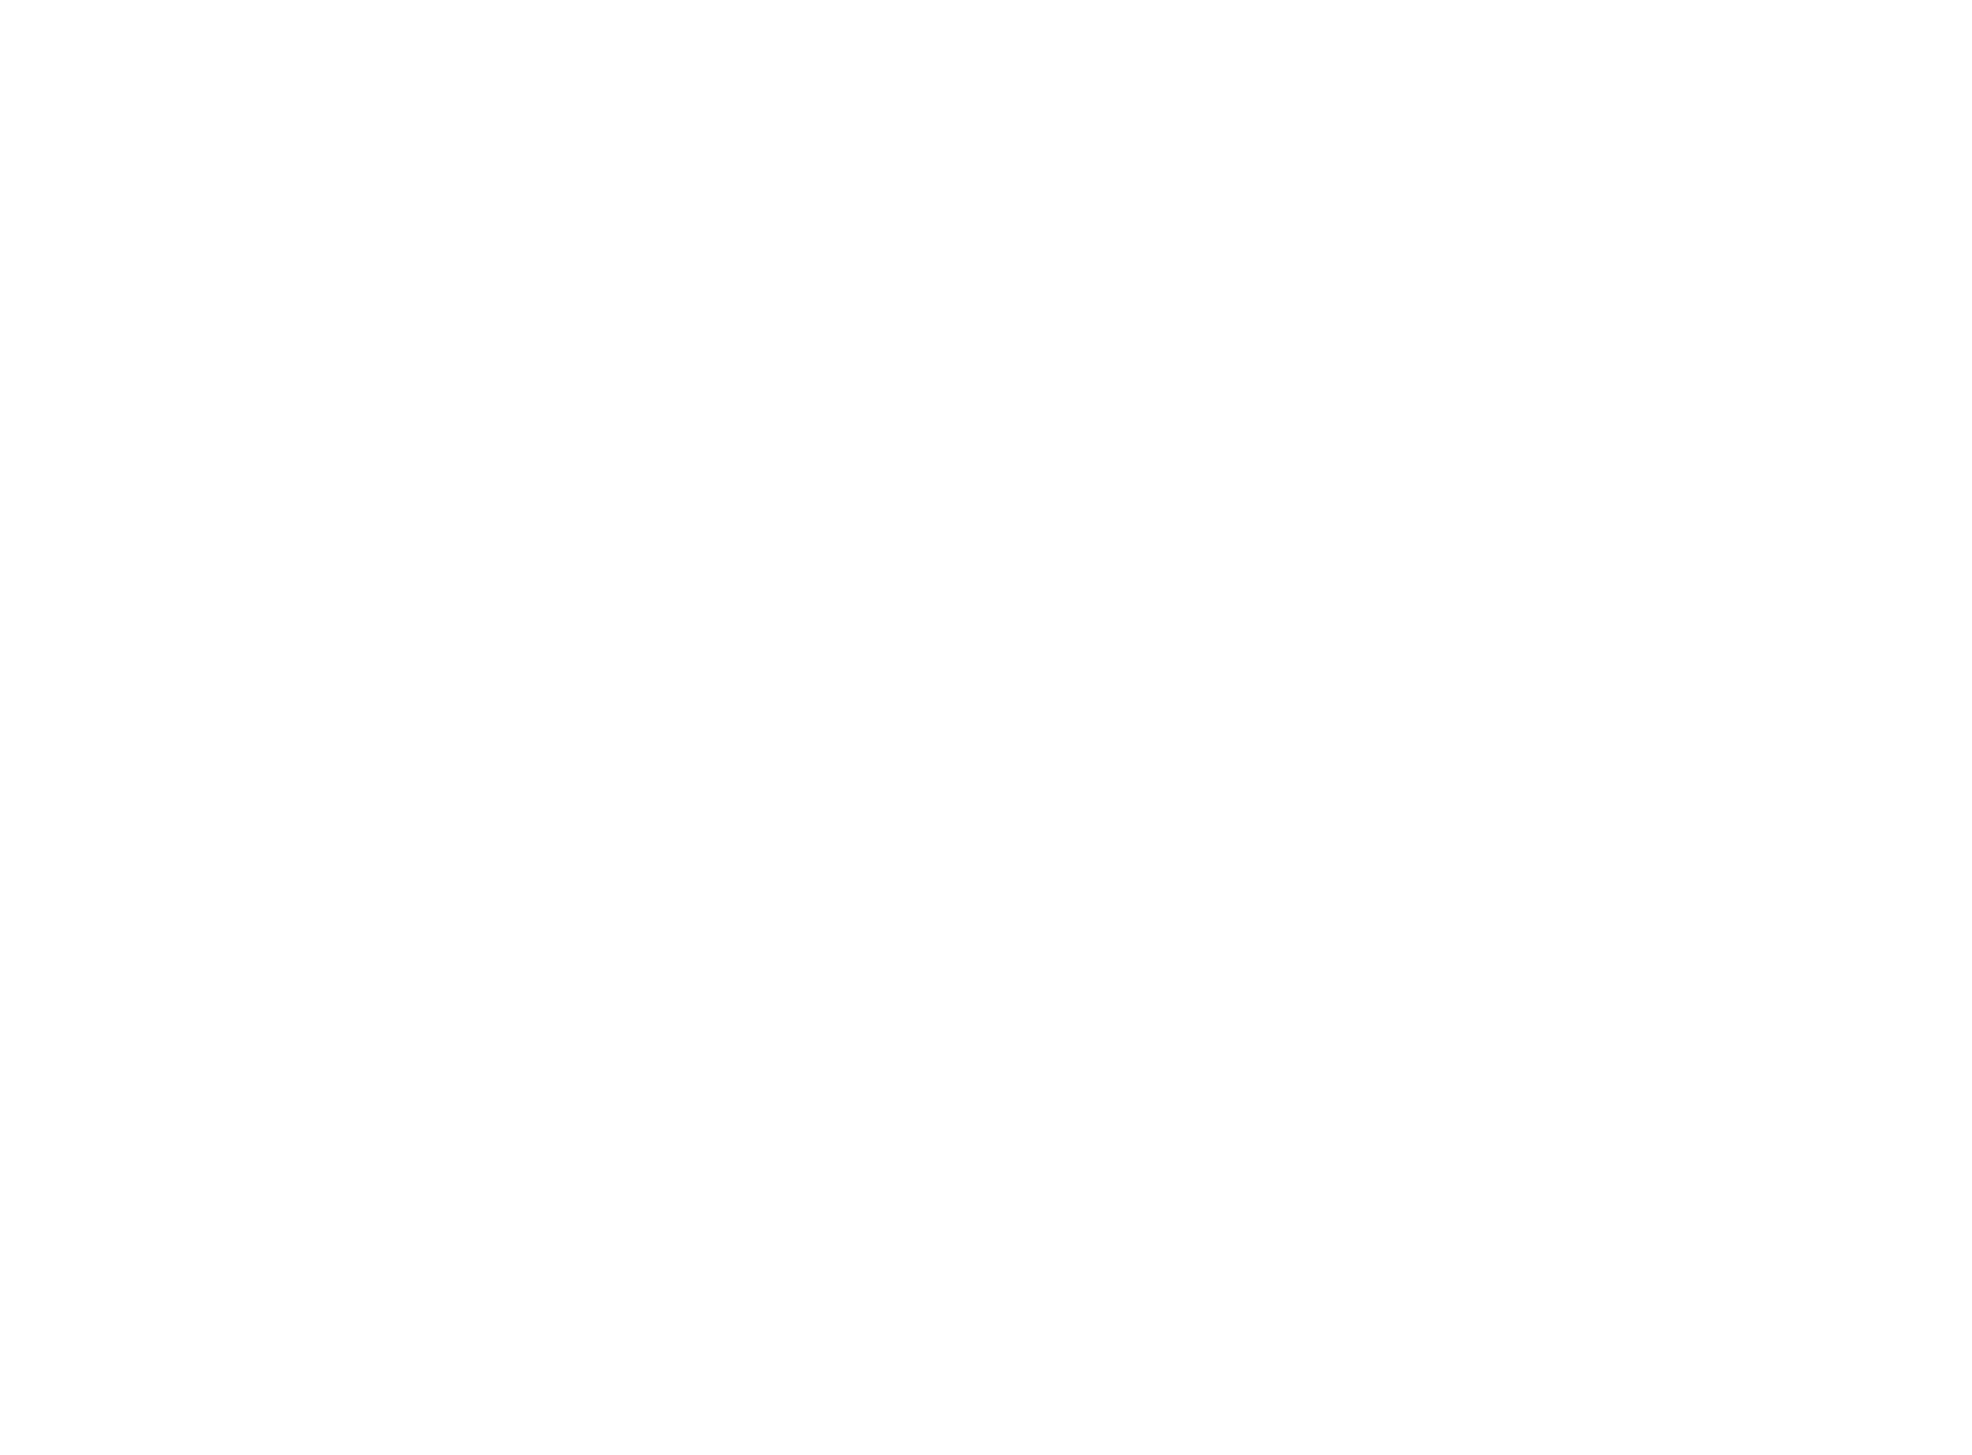 Meerkat Media